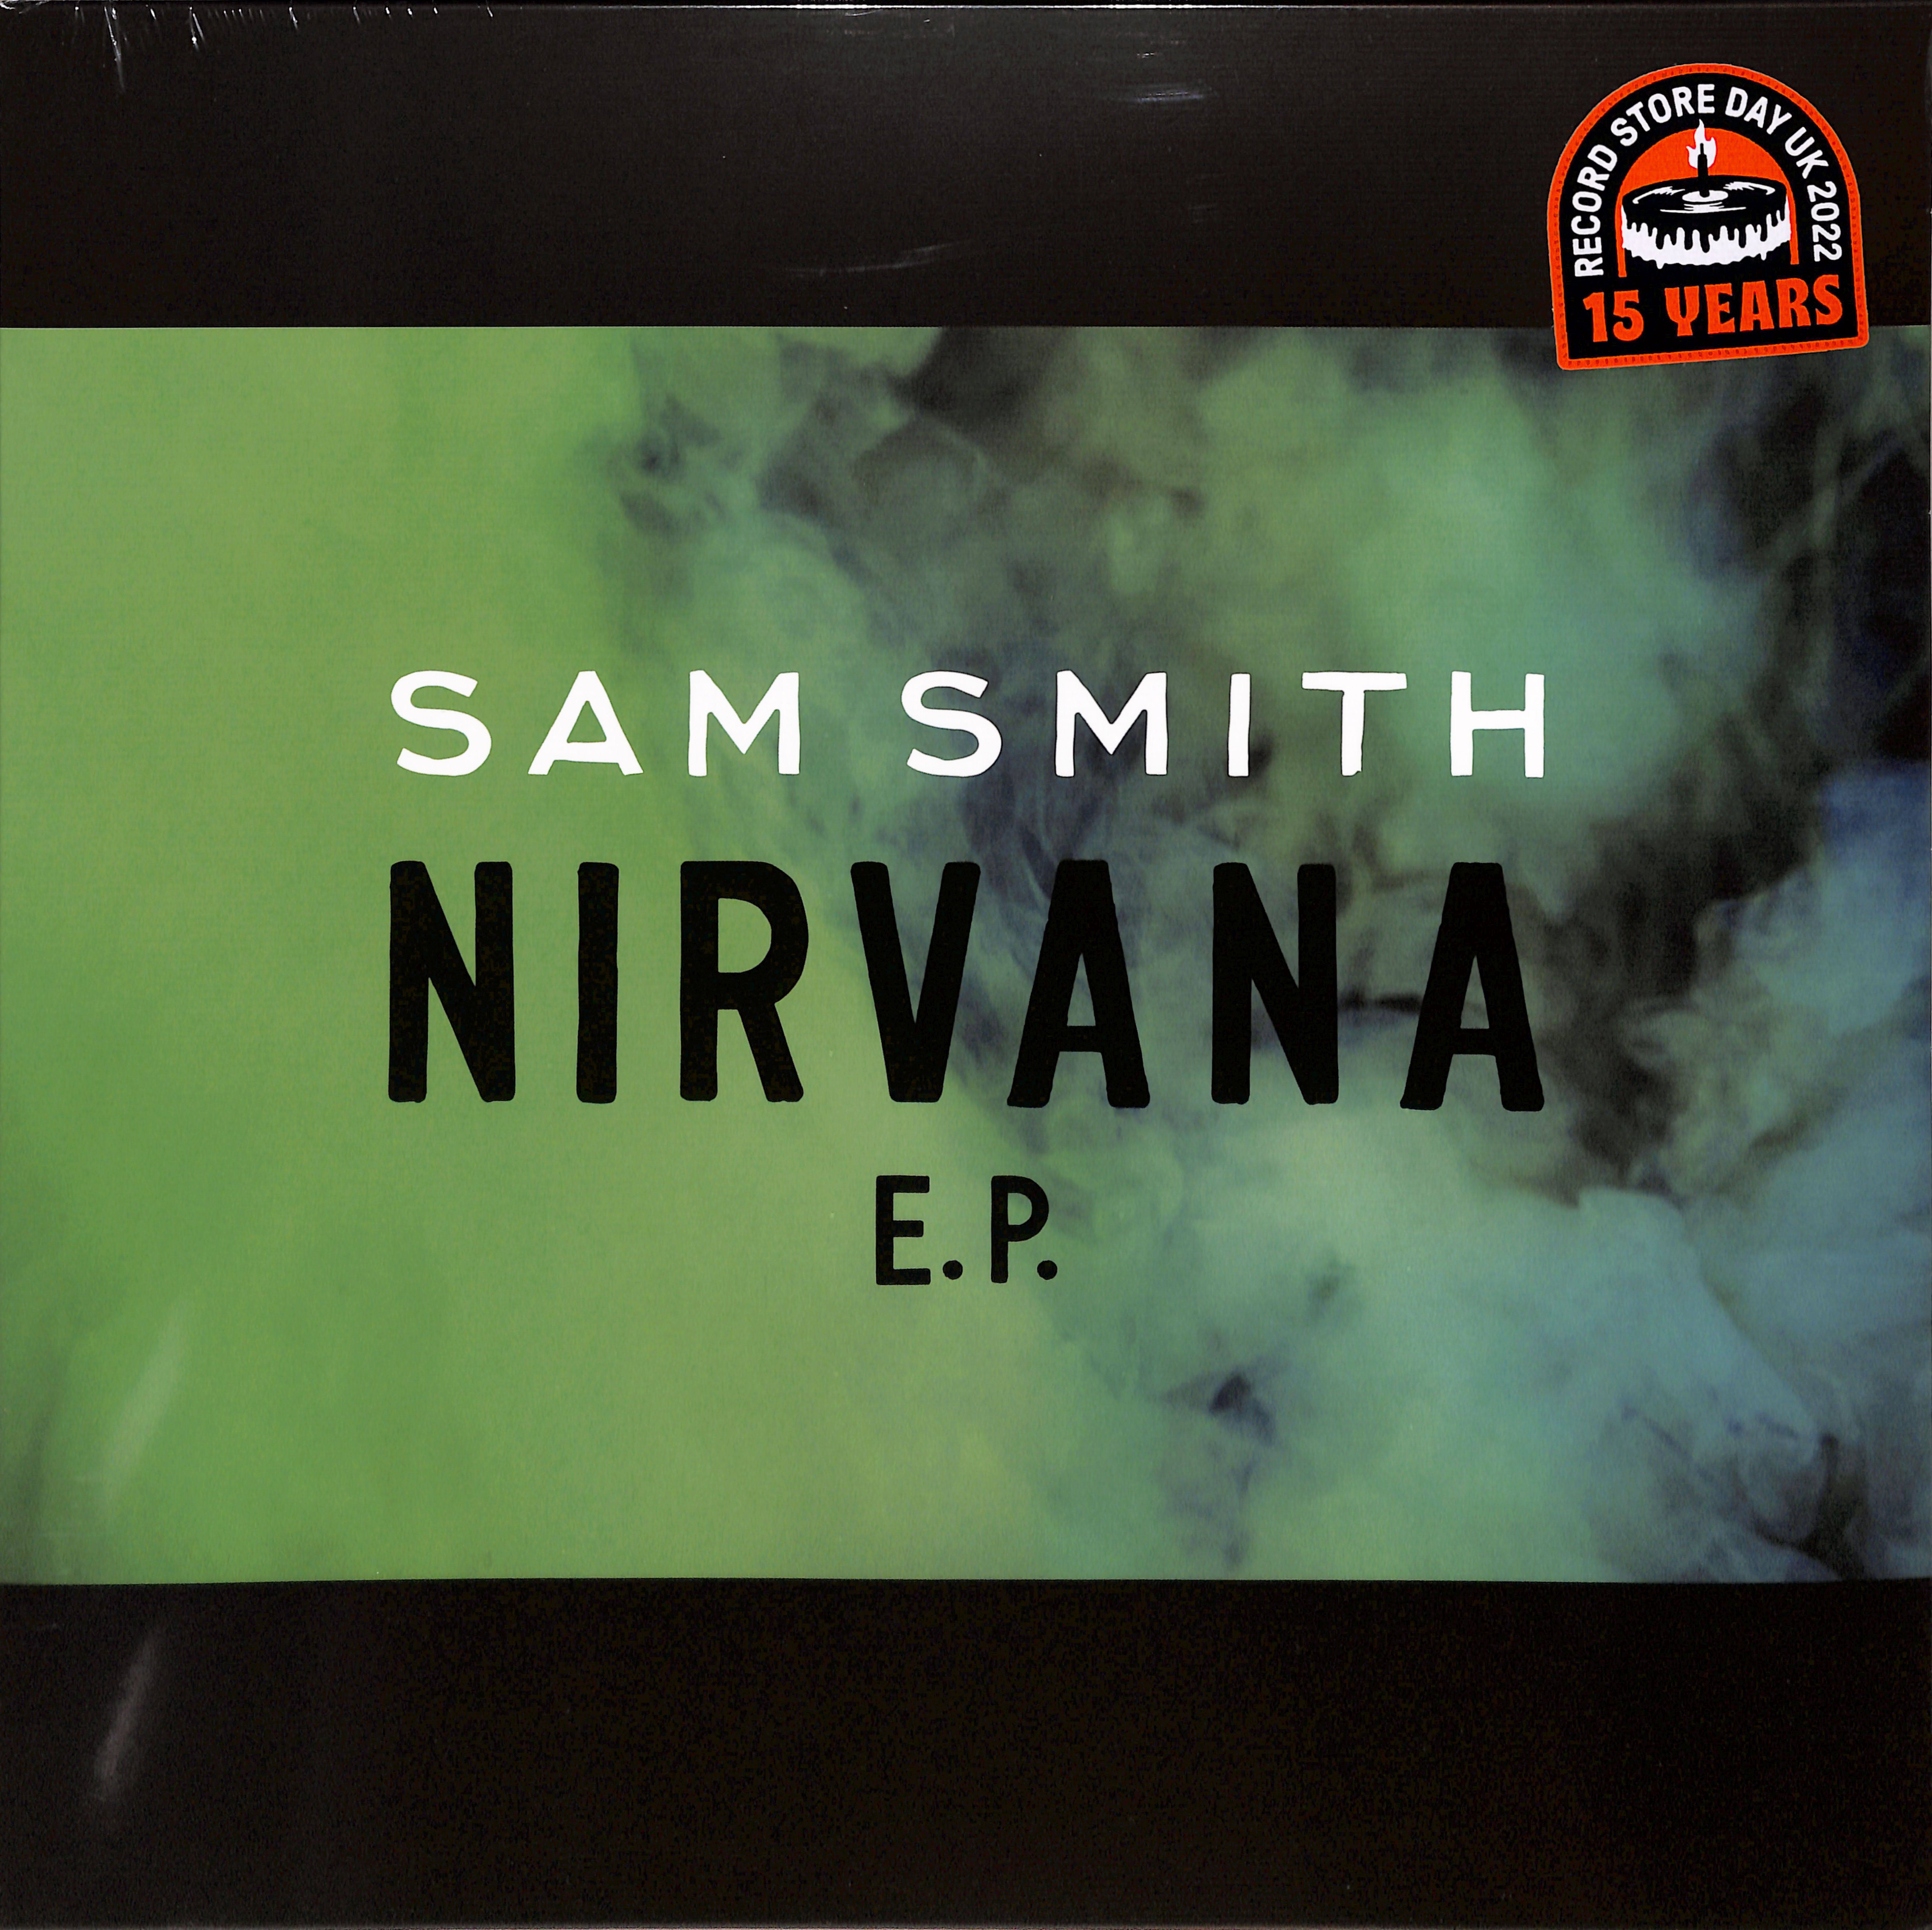 Sam Smith - Nirvana E.P. RSD 2022 Green Vinyl